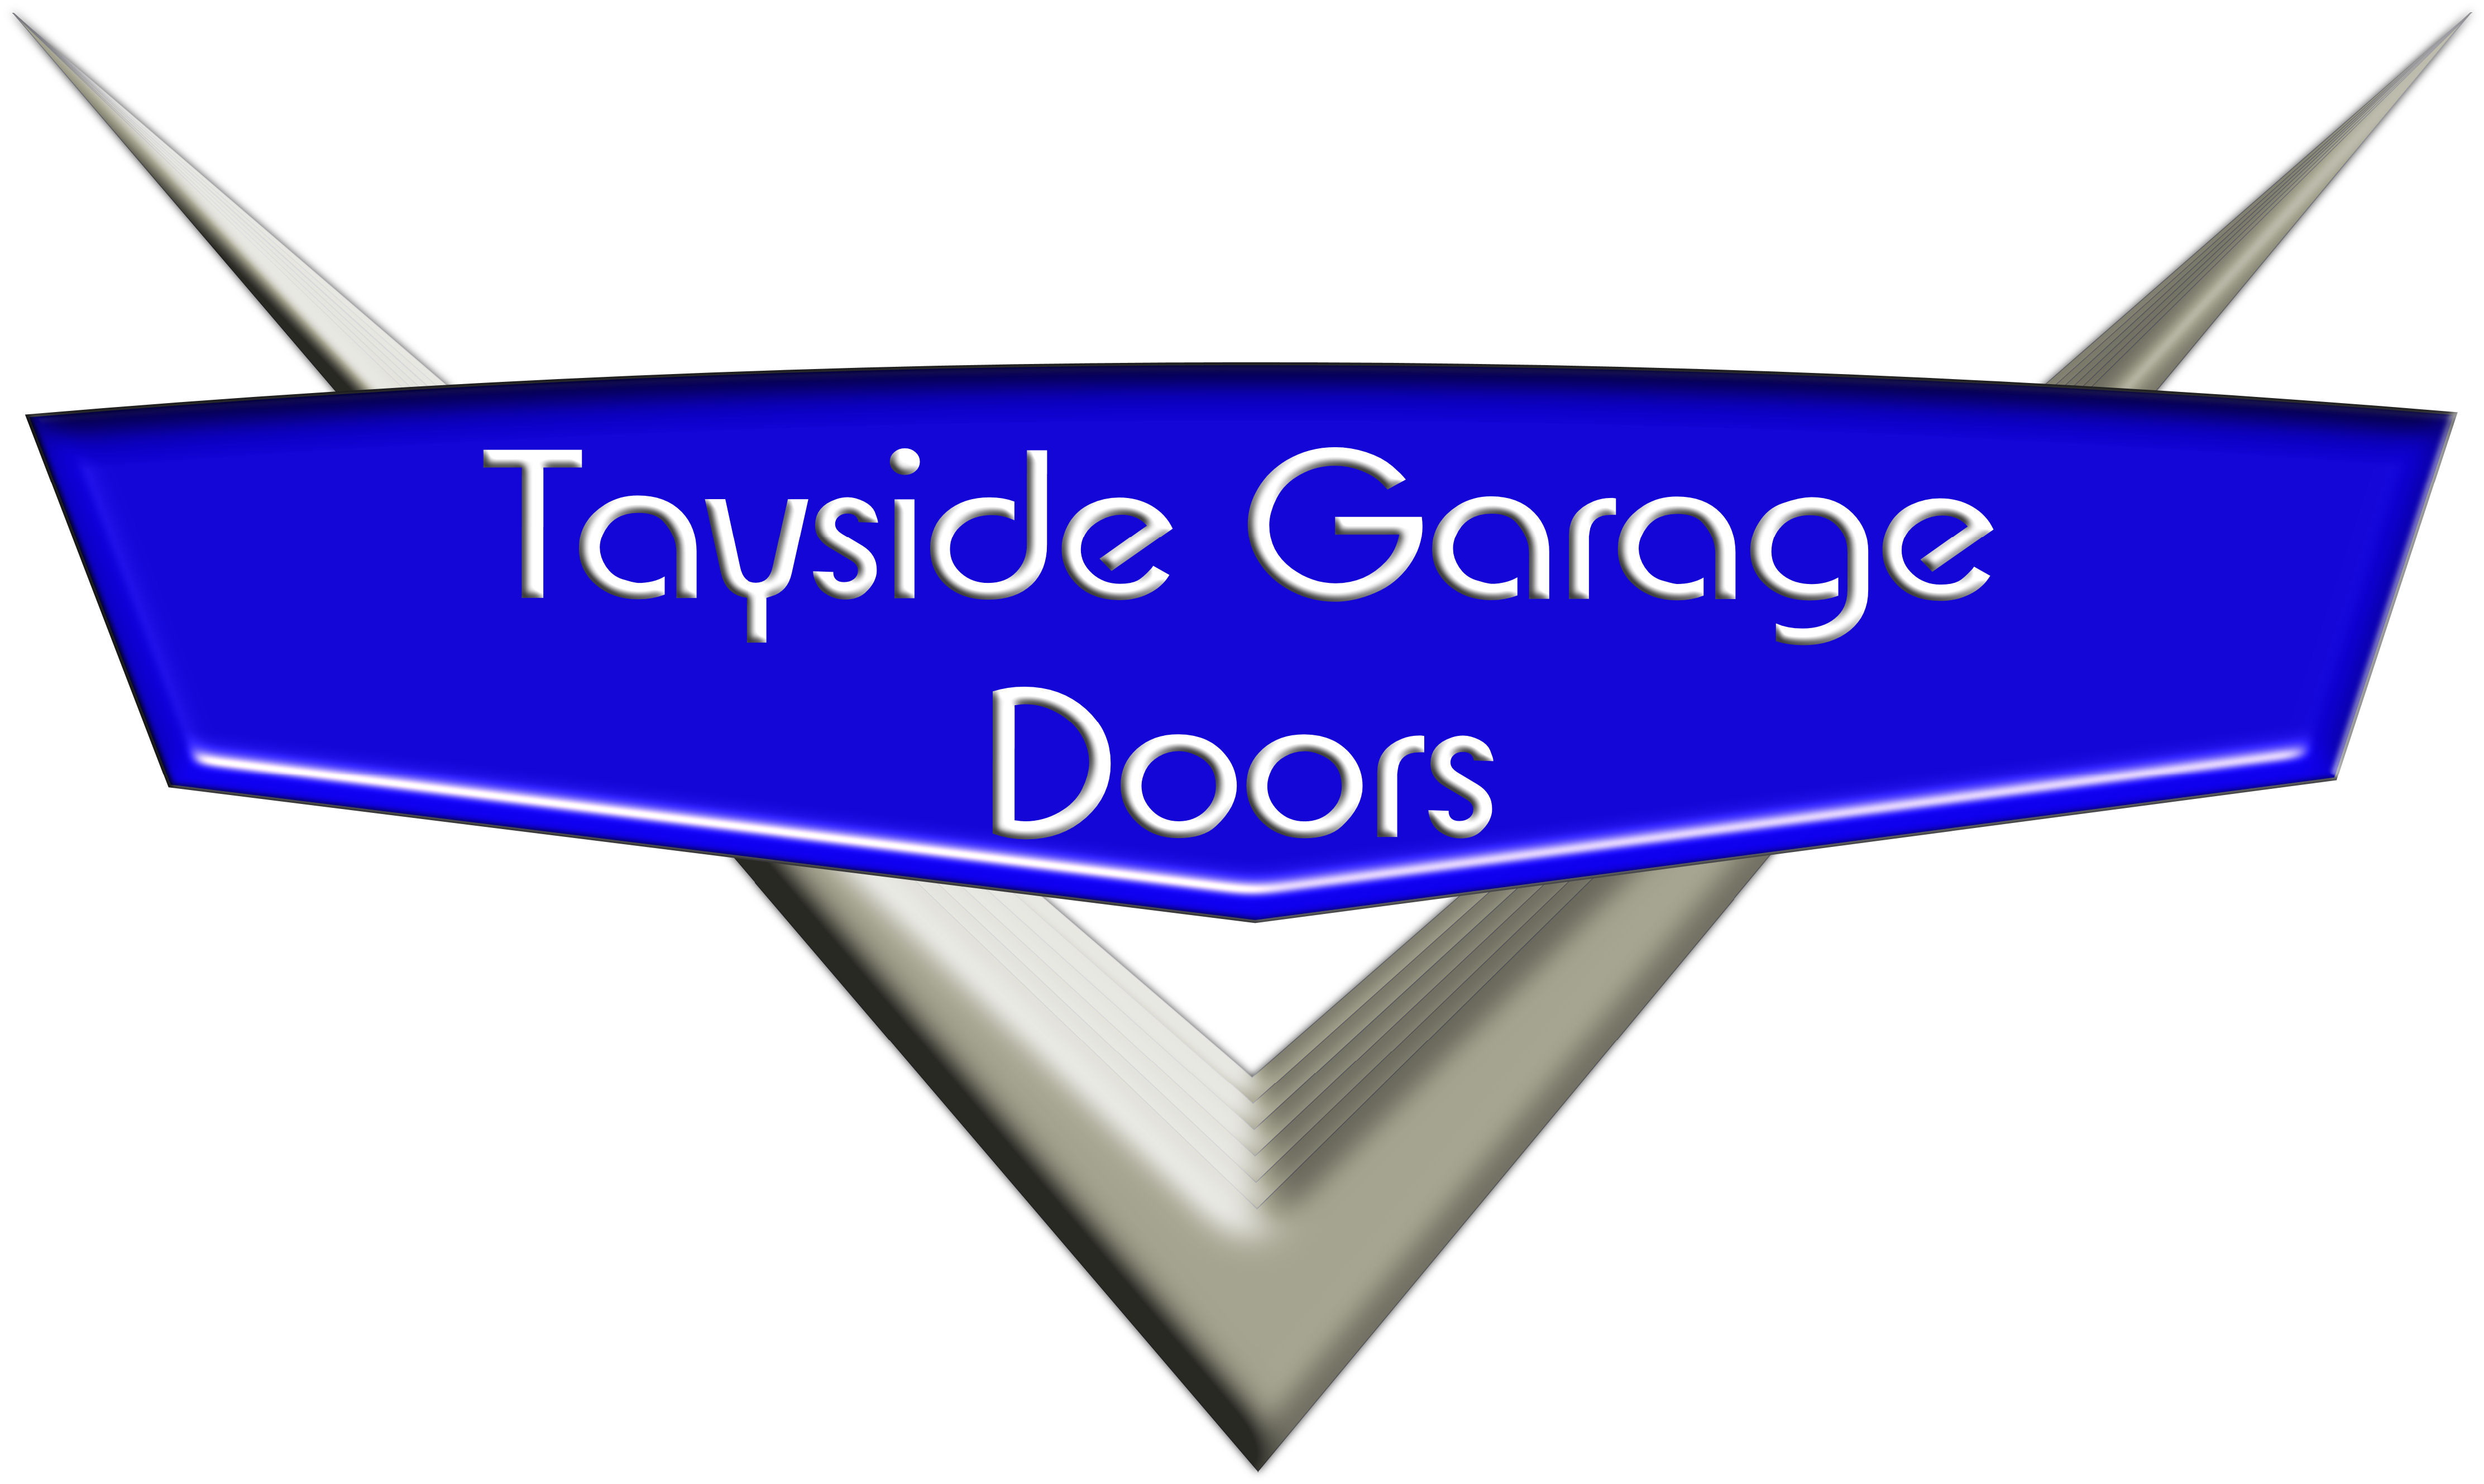 Tayside Garage Doors Limited